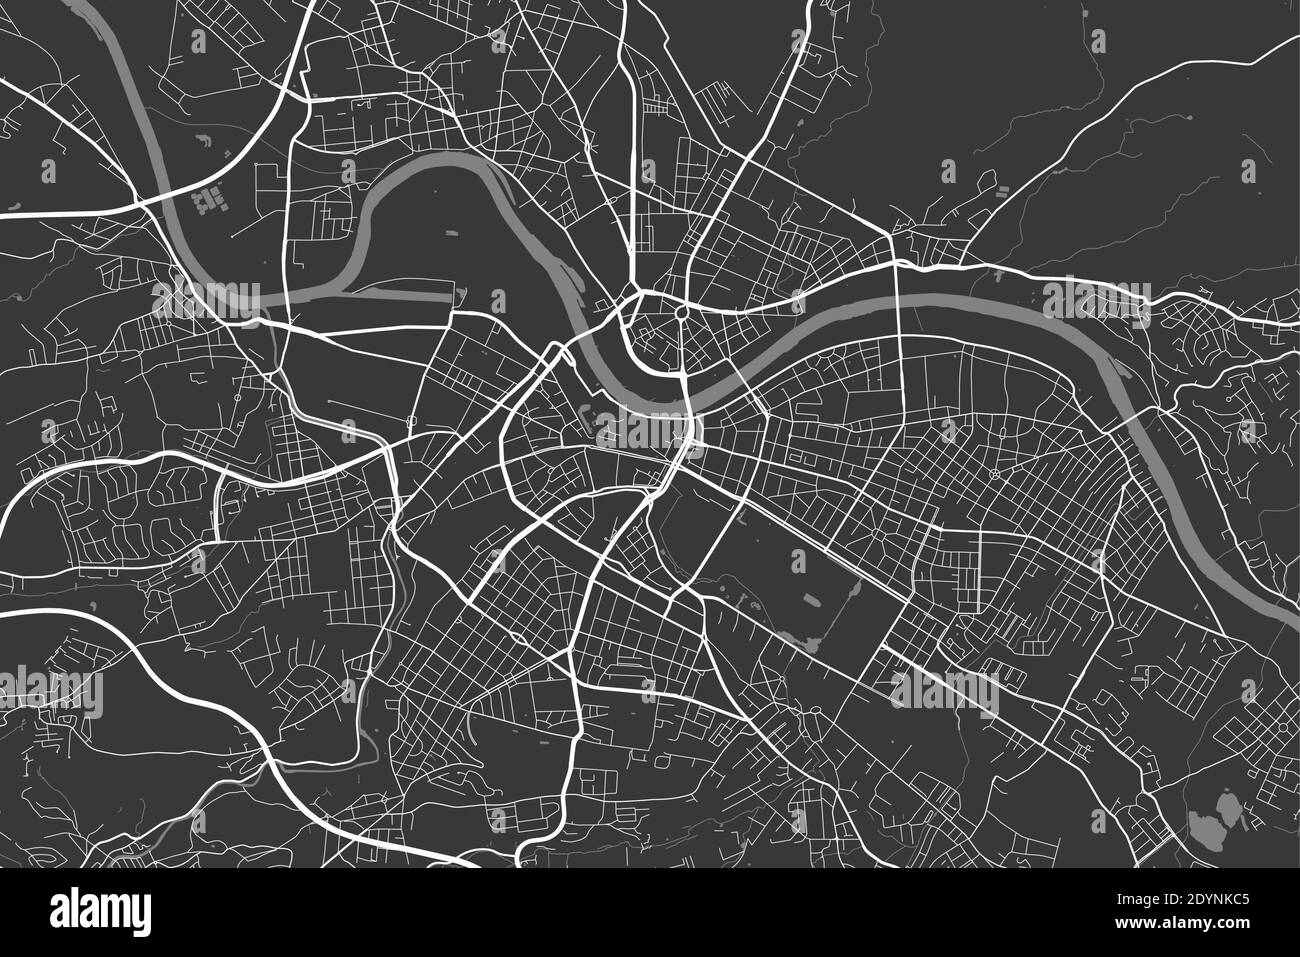 Urban city map of Dresden. Vector illustration, Dresden map art poster. Street map image with roads, metropolitan city area view. Stock Vector